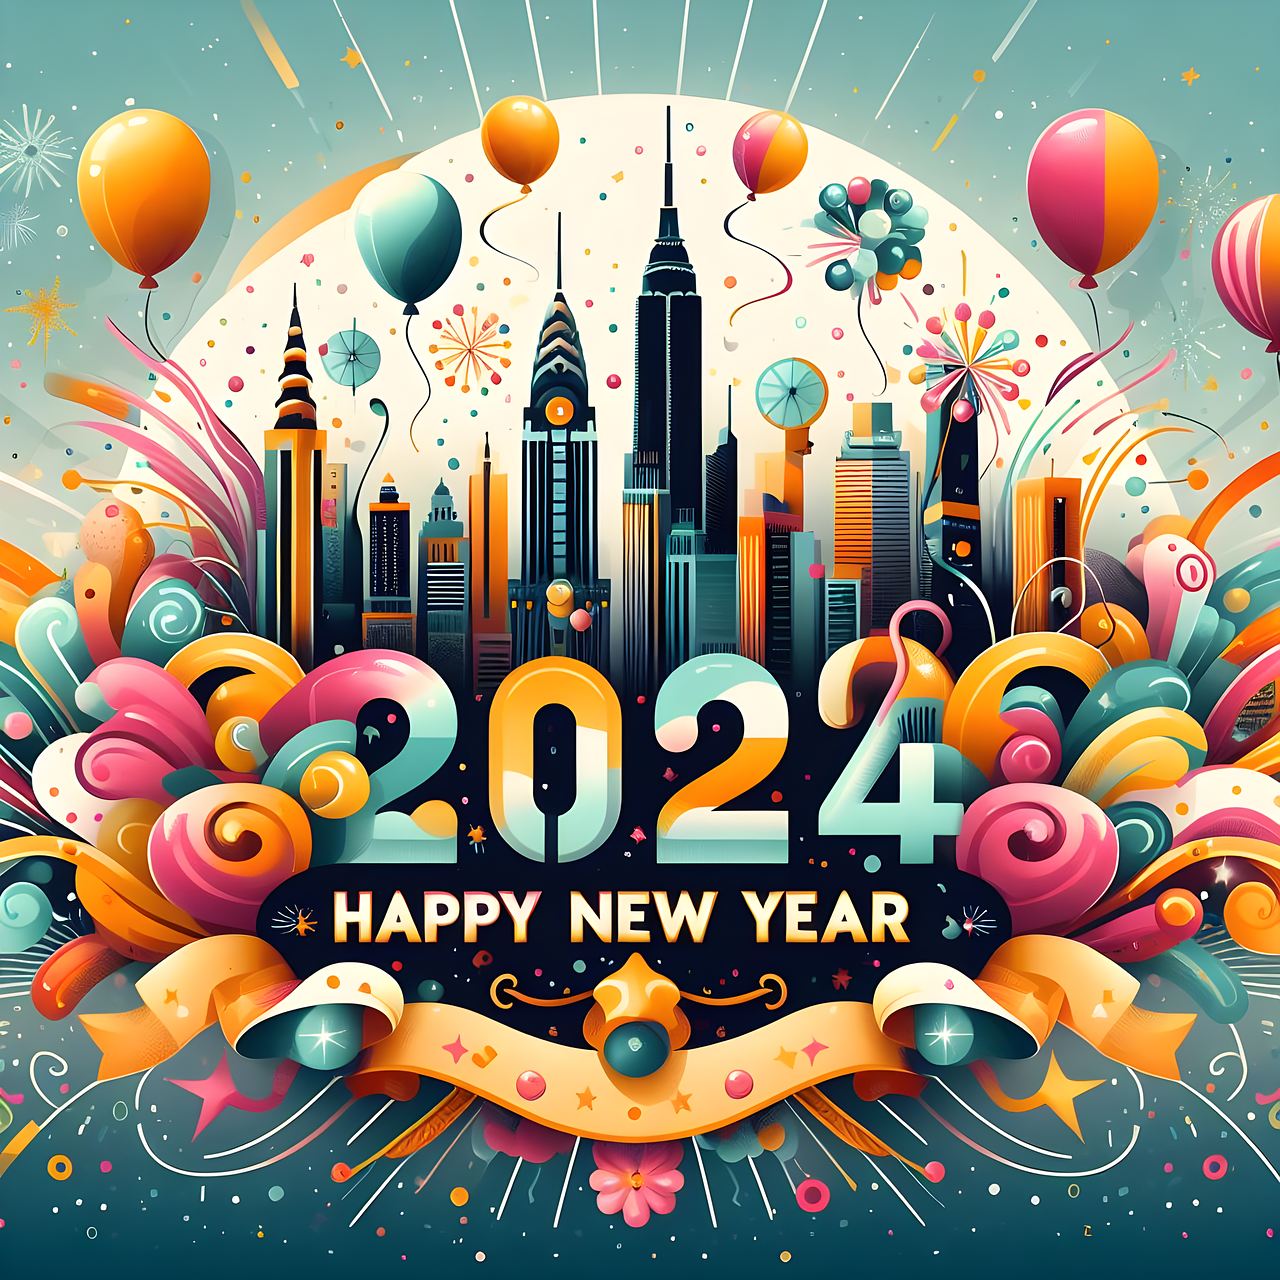 news year, happy new year, 2024-8395929.jpg